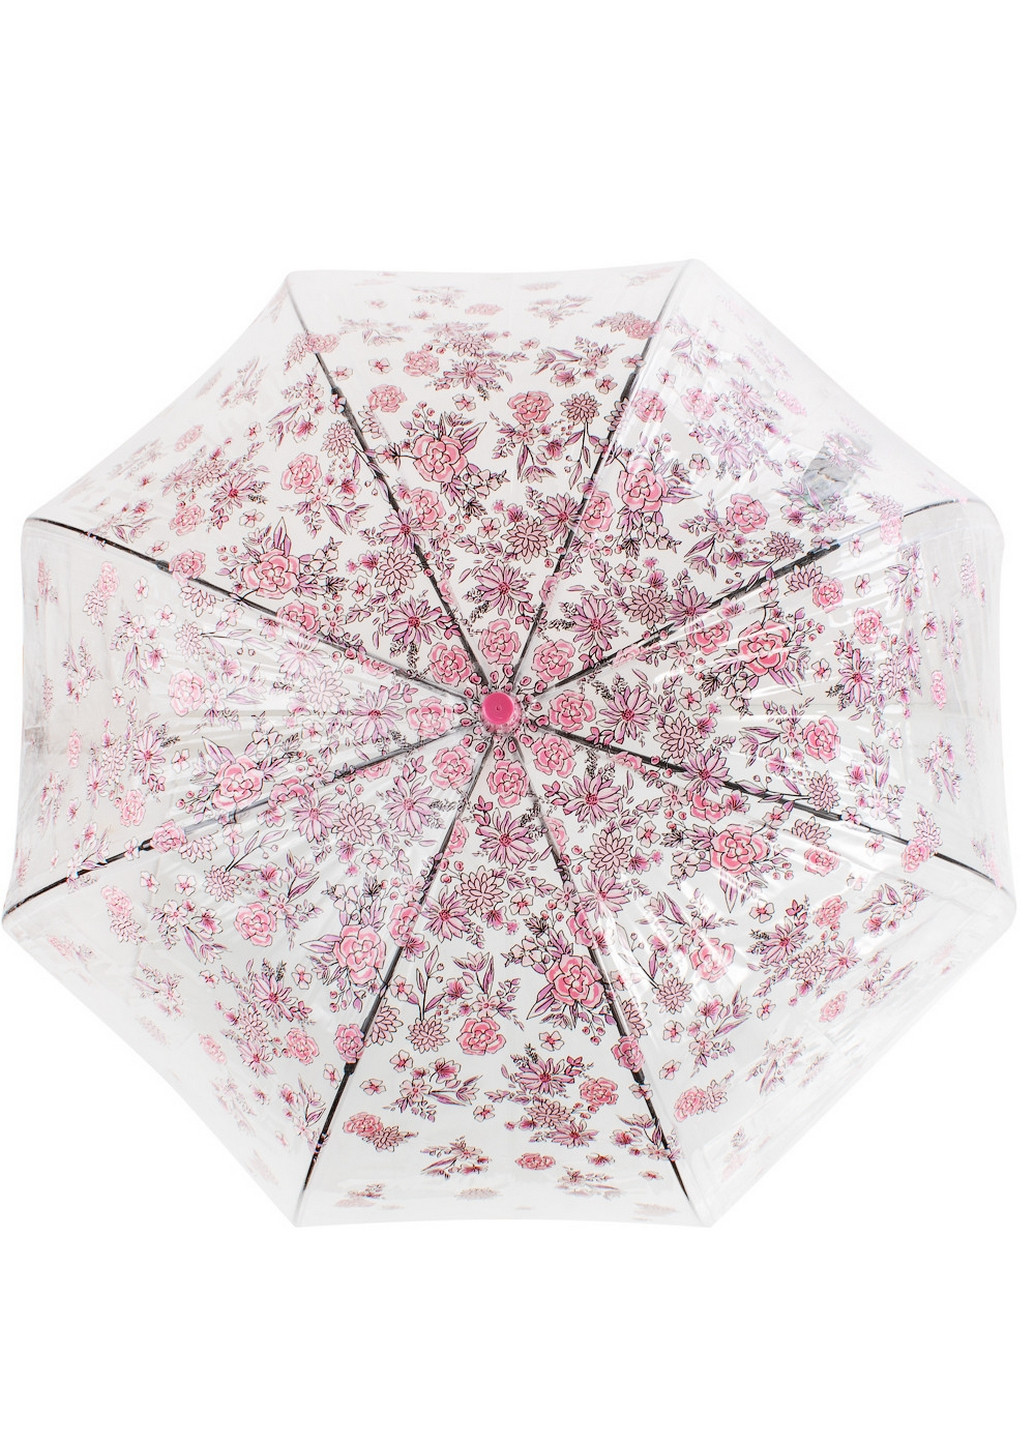 Жіноча парасолька-тростина механічна 84 см Fulton (260330434)